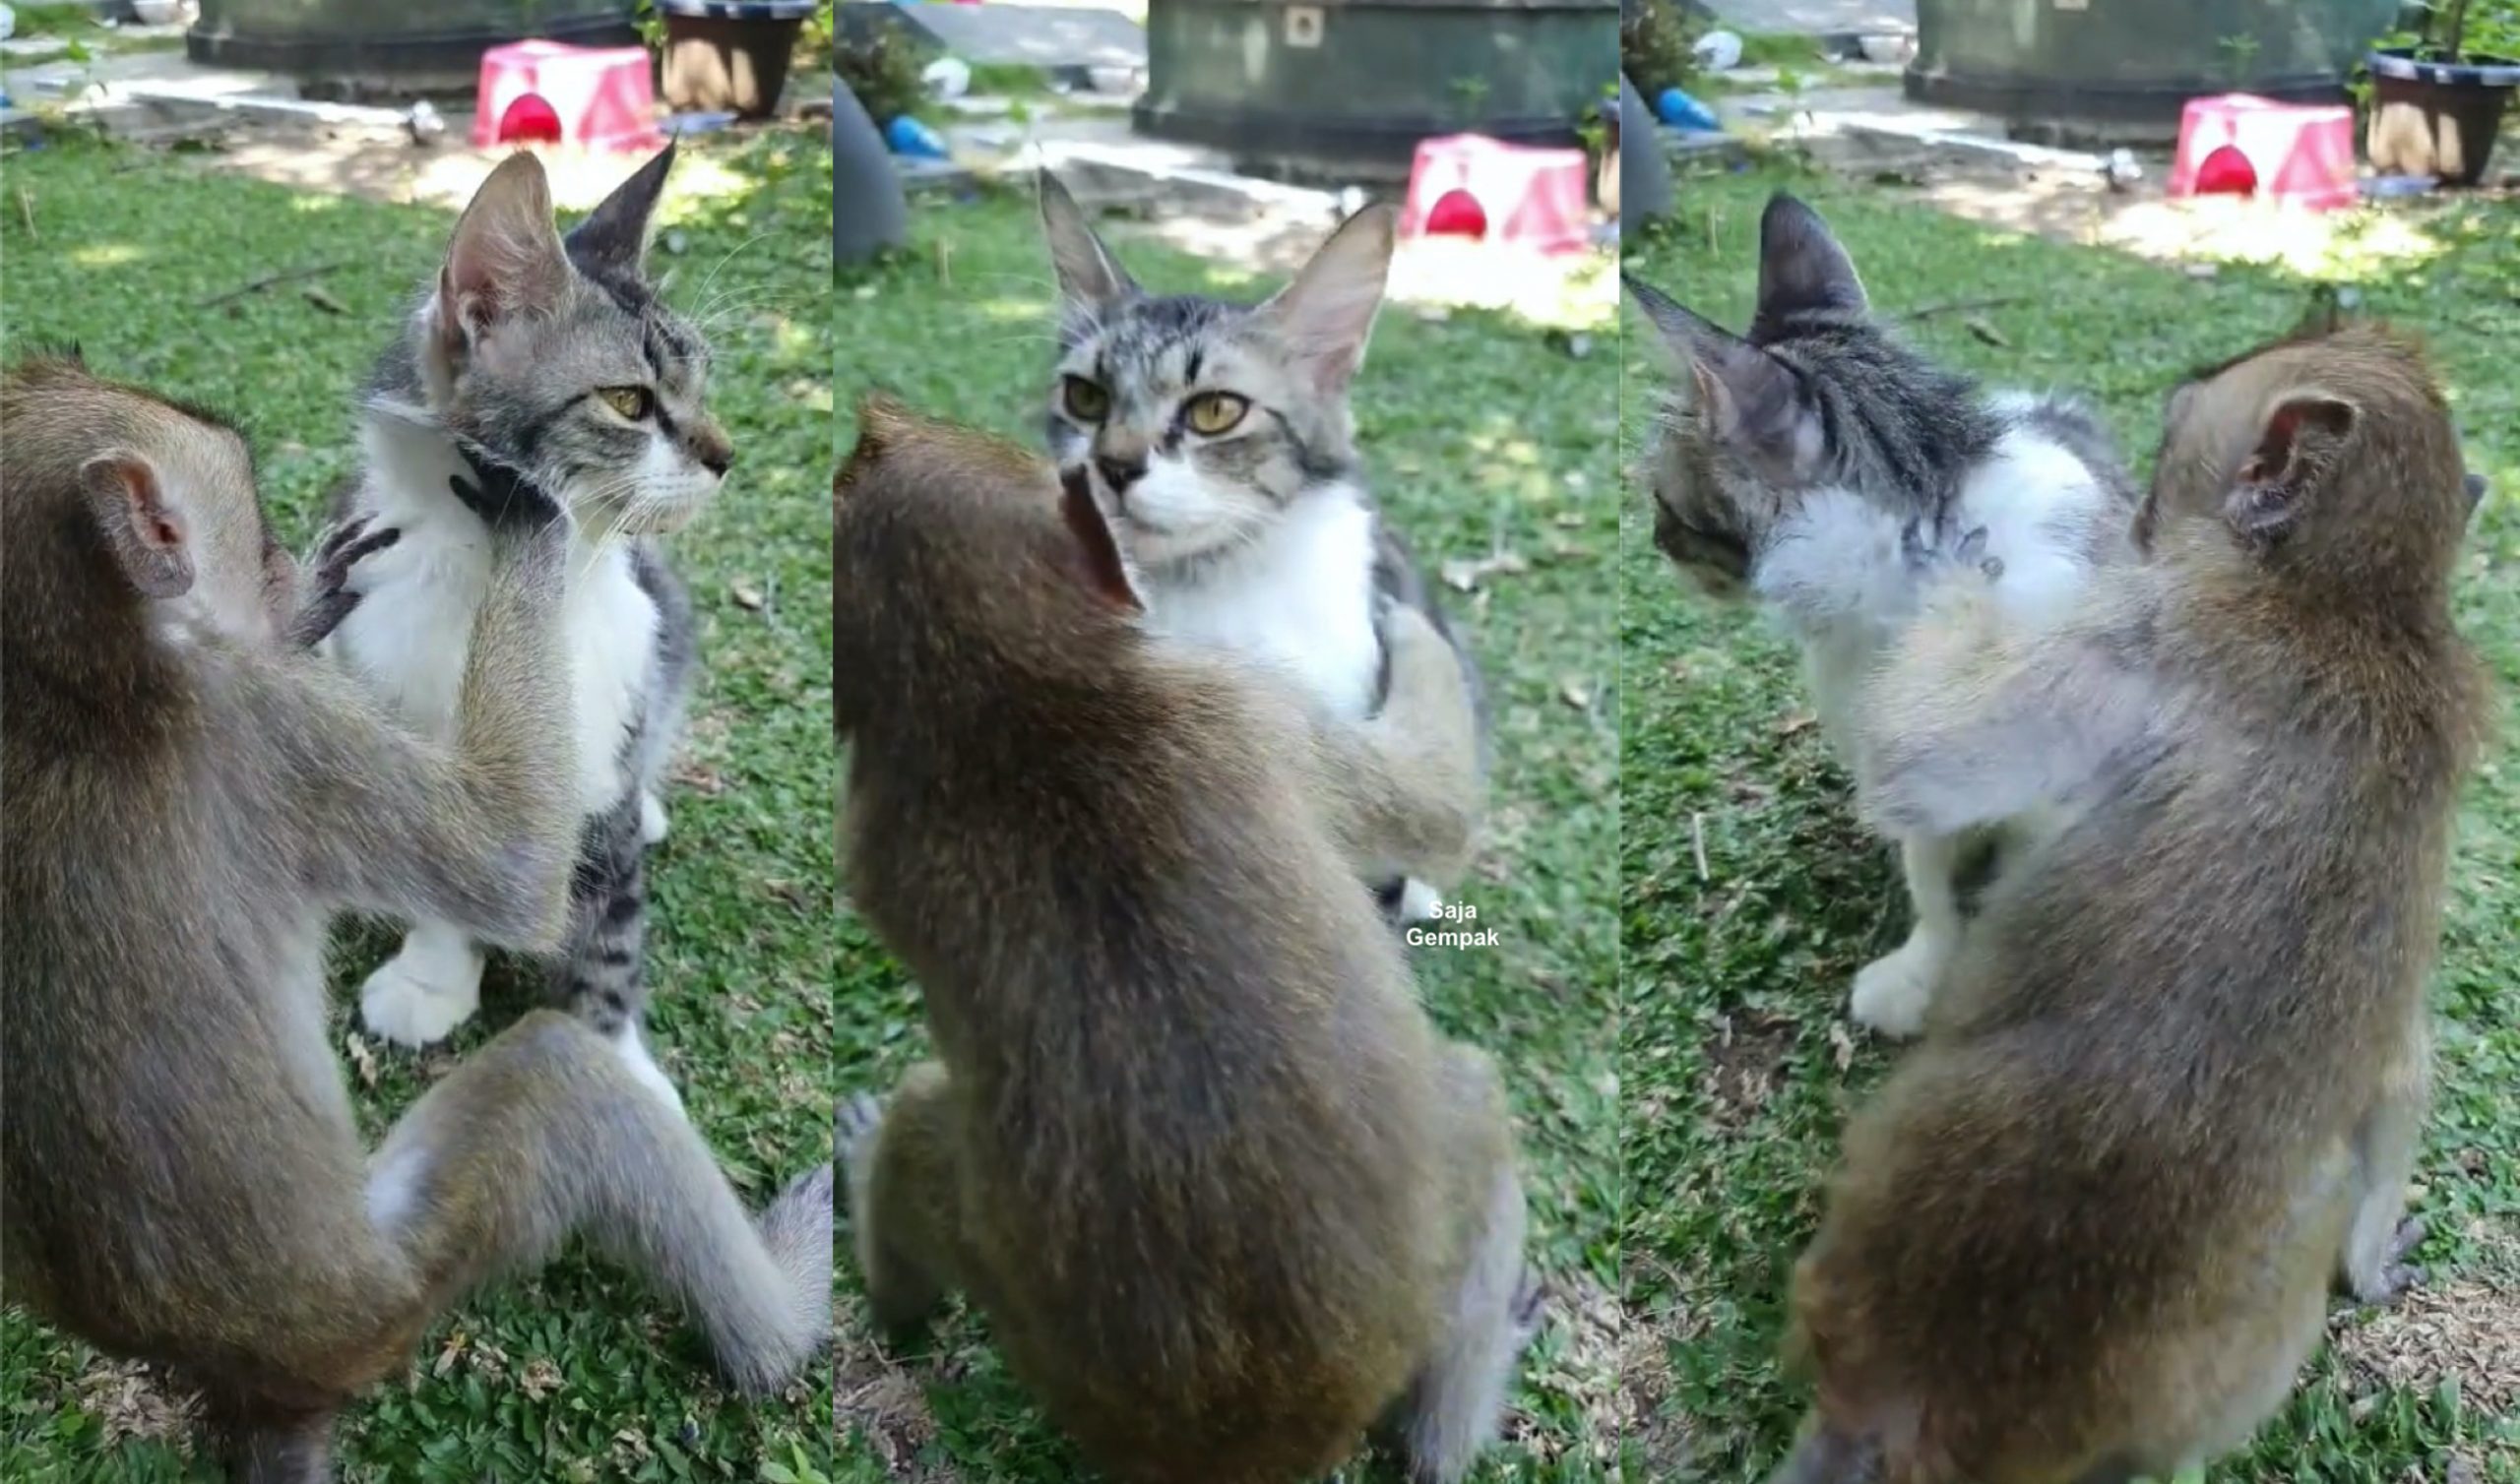 Monyet Gigih Tolong Bersihkan Kutu Di Badan Kucing, Gelagat Keduanya Buat Netizen Tergelak - sajagempak.com